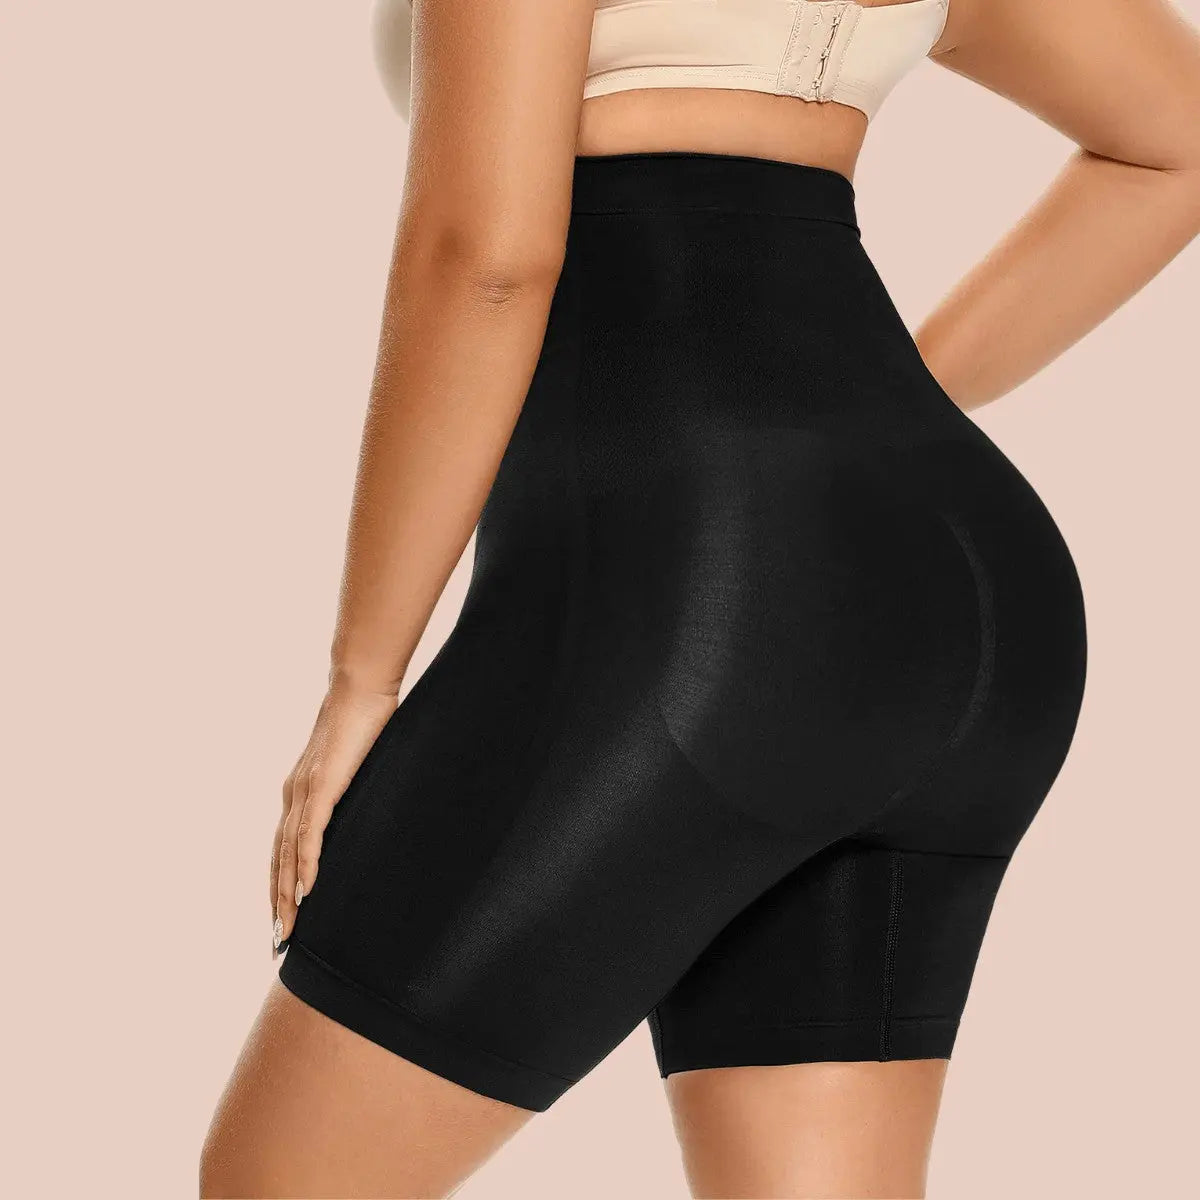 SHAPERX High Waist Body Shaper Shorts for Women Tummy Control